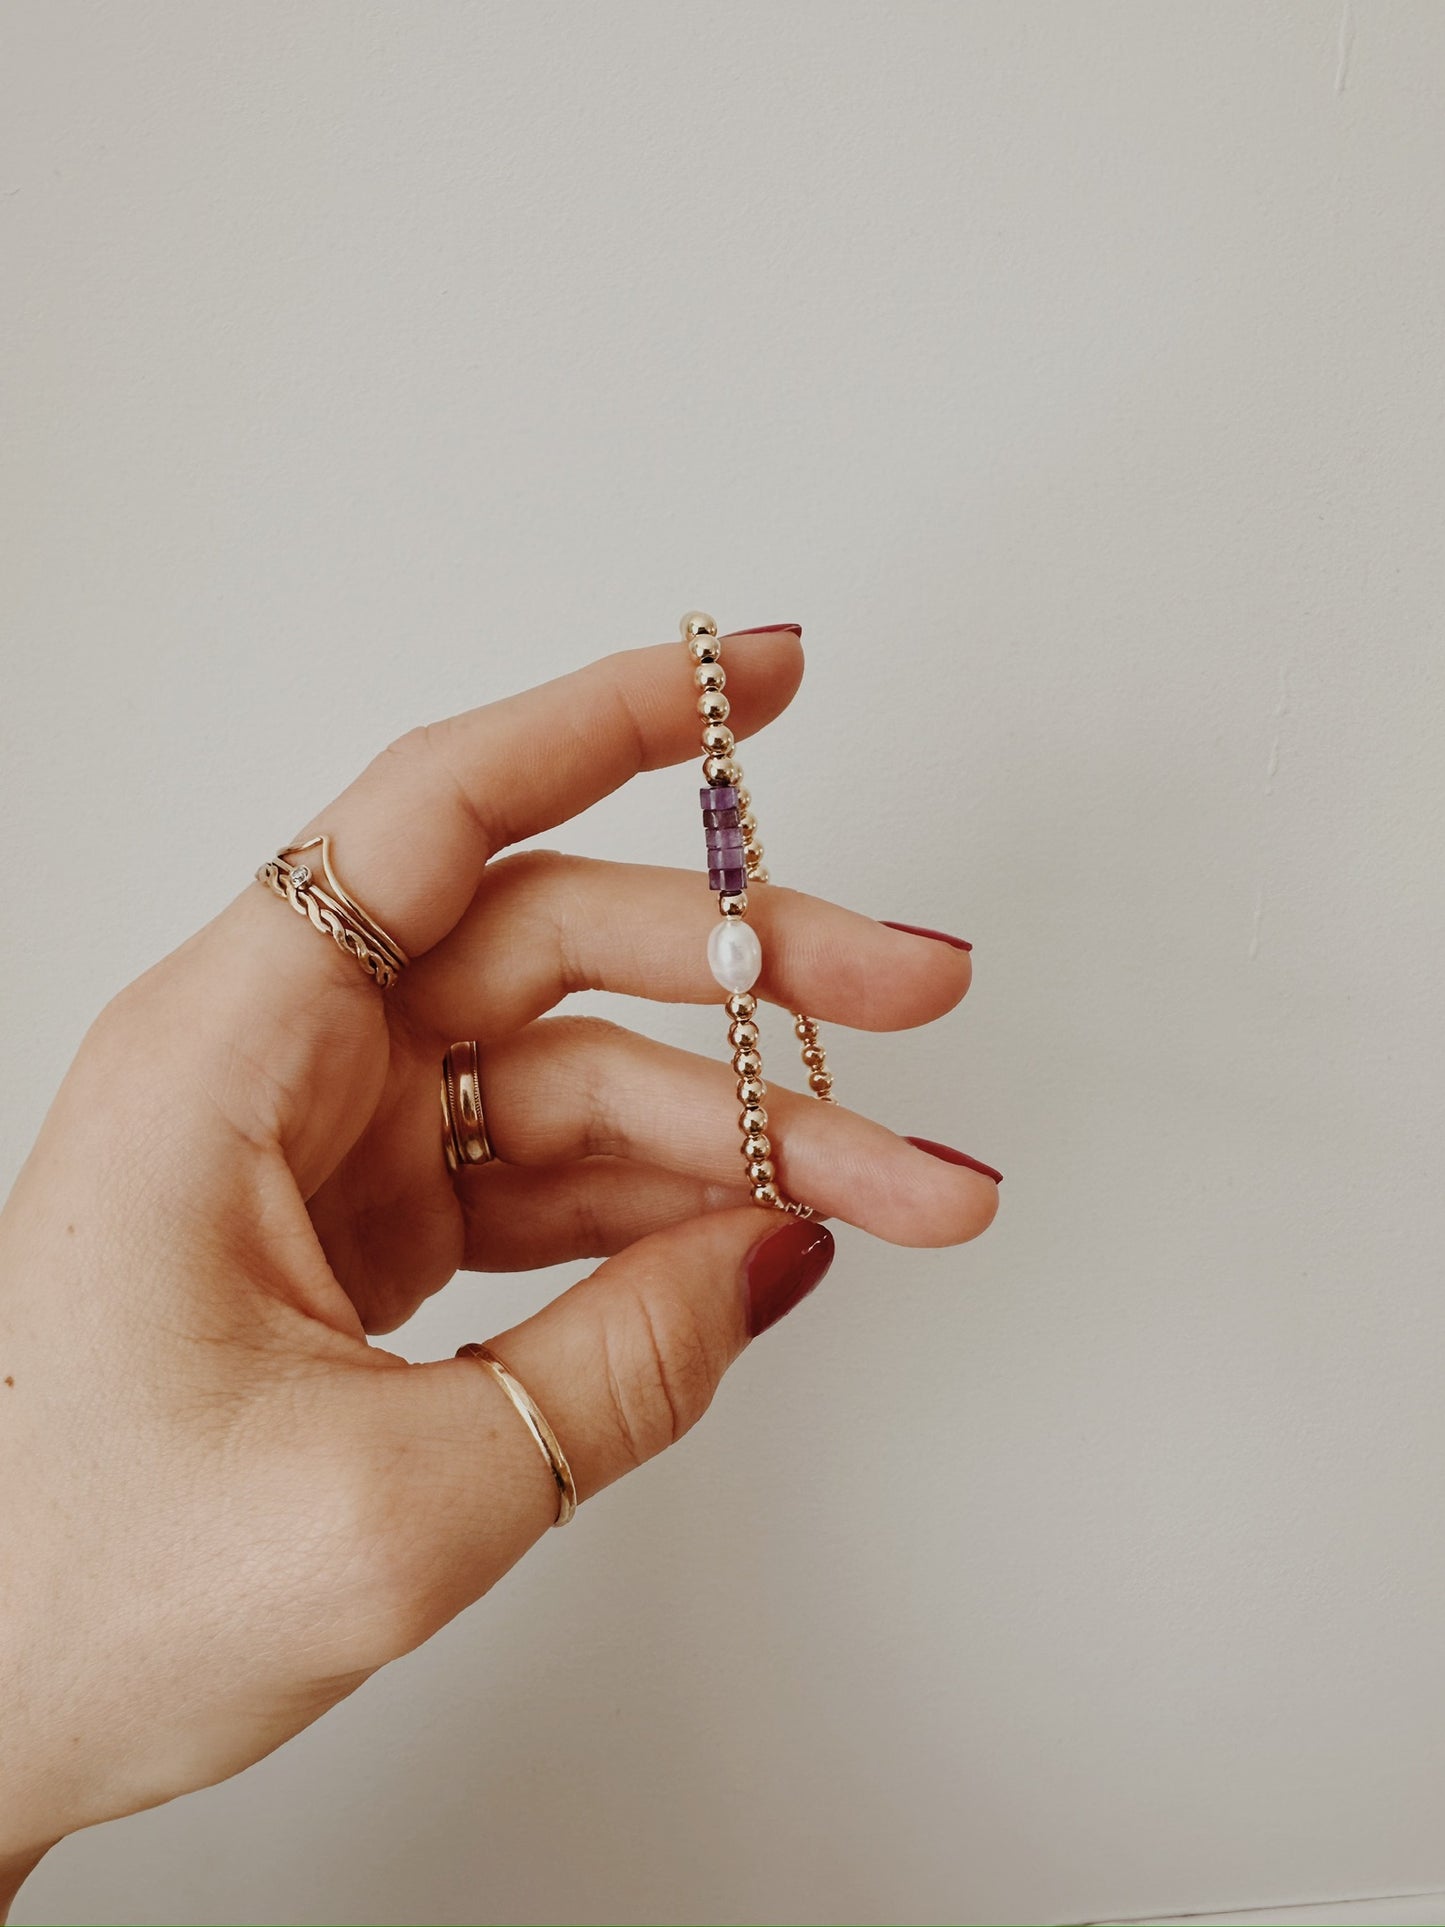 Pearl + Amethyst gemstone + Gold beaded bracelet Set